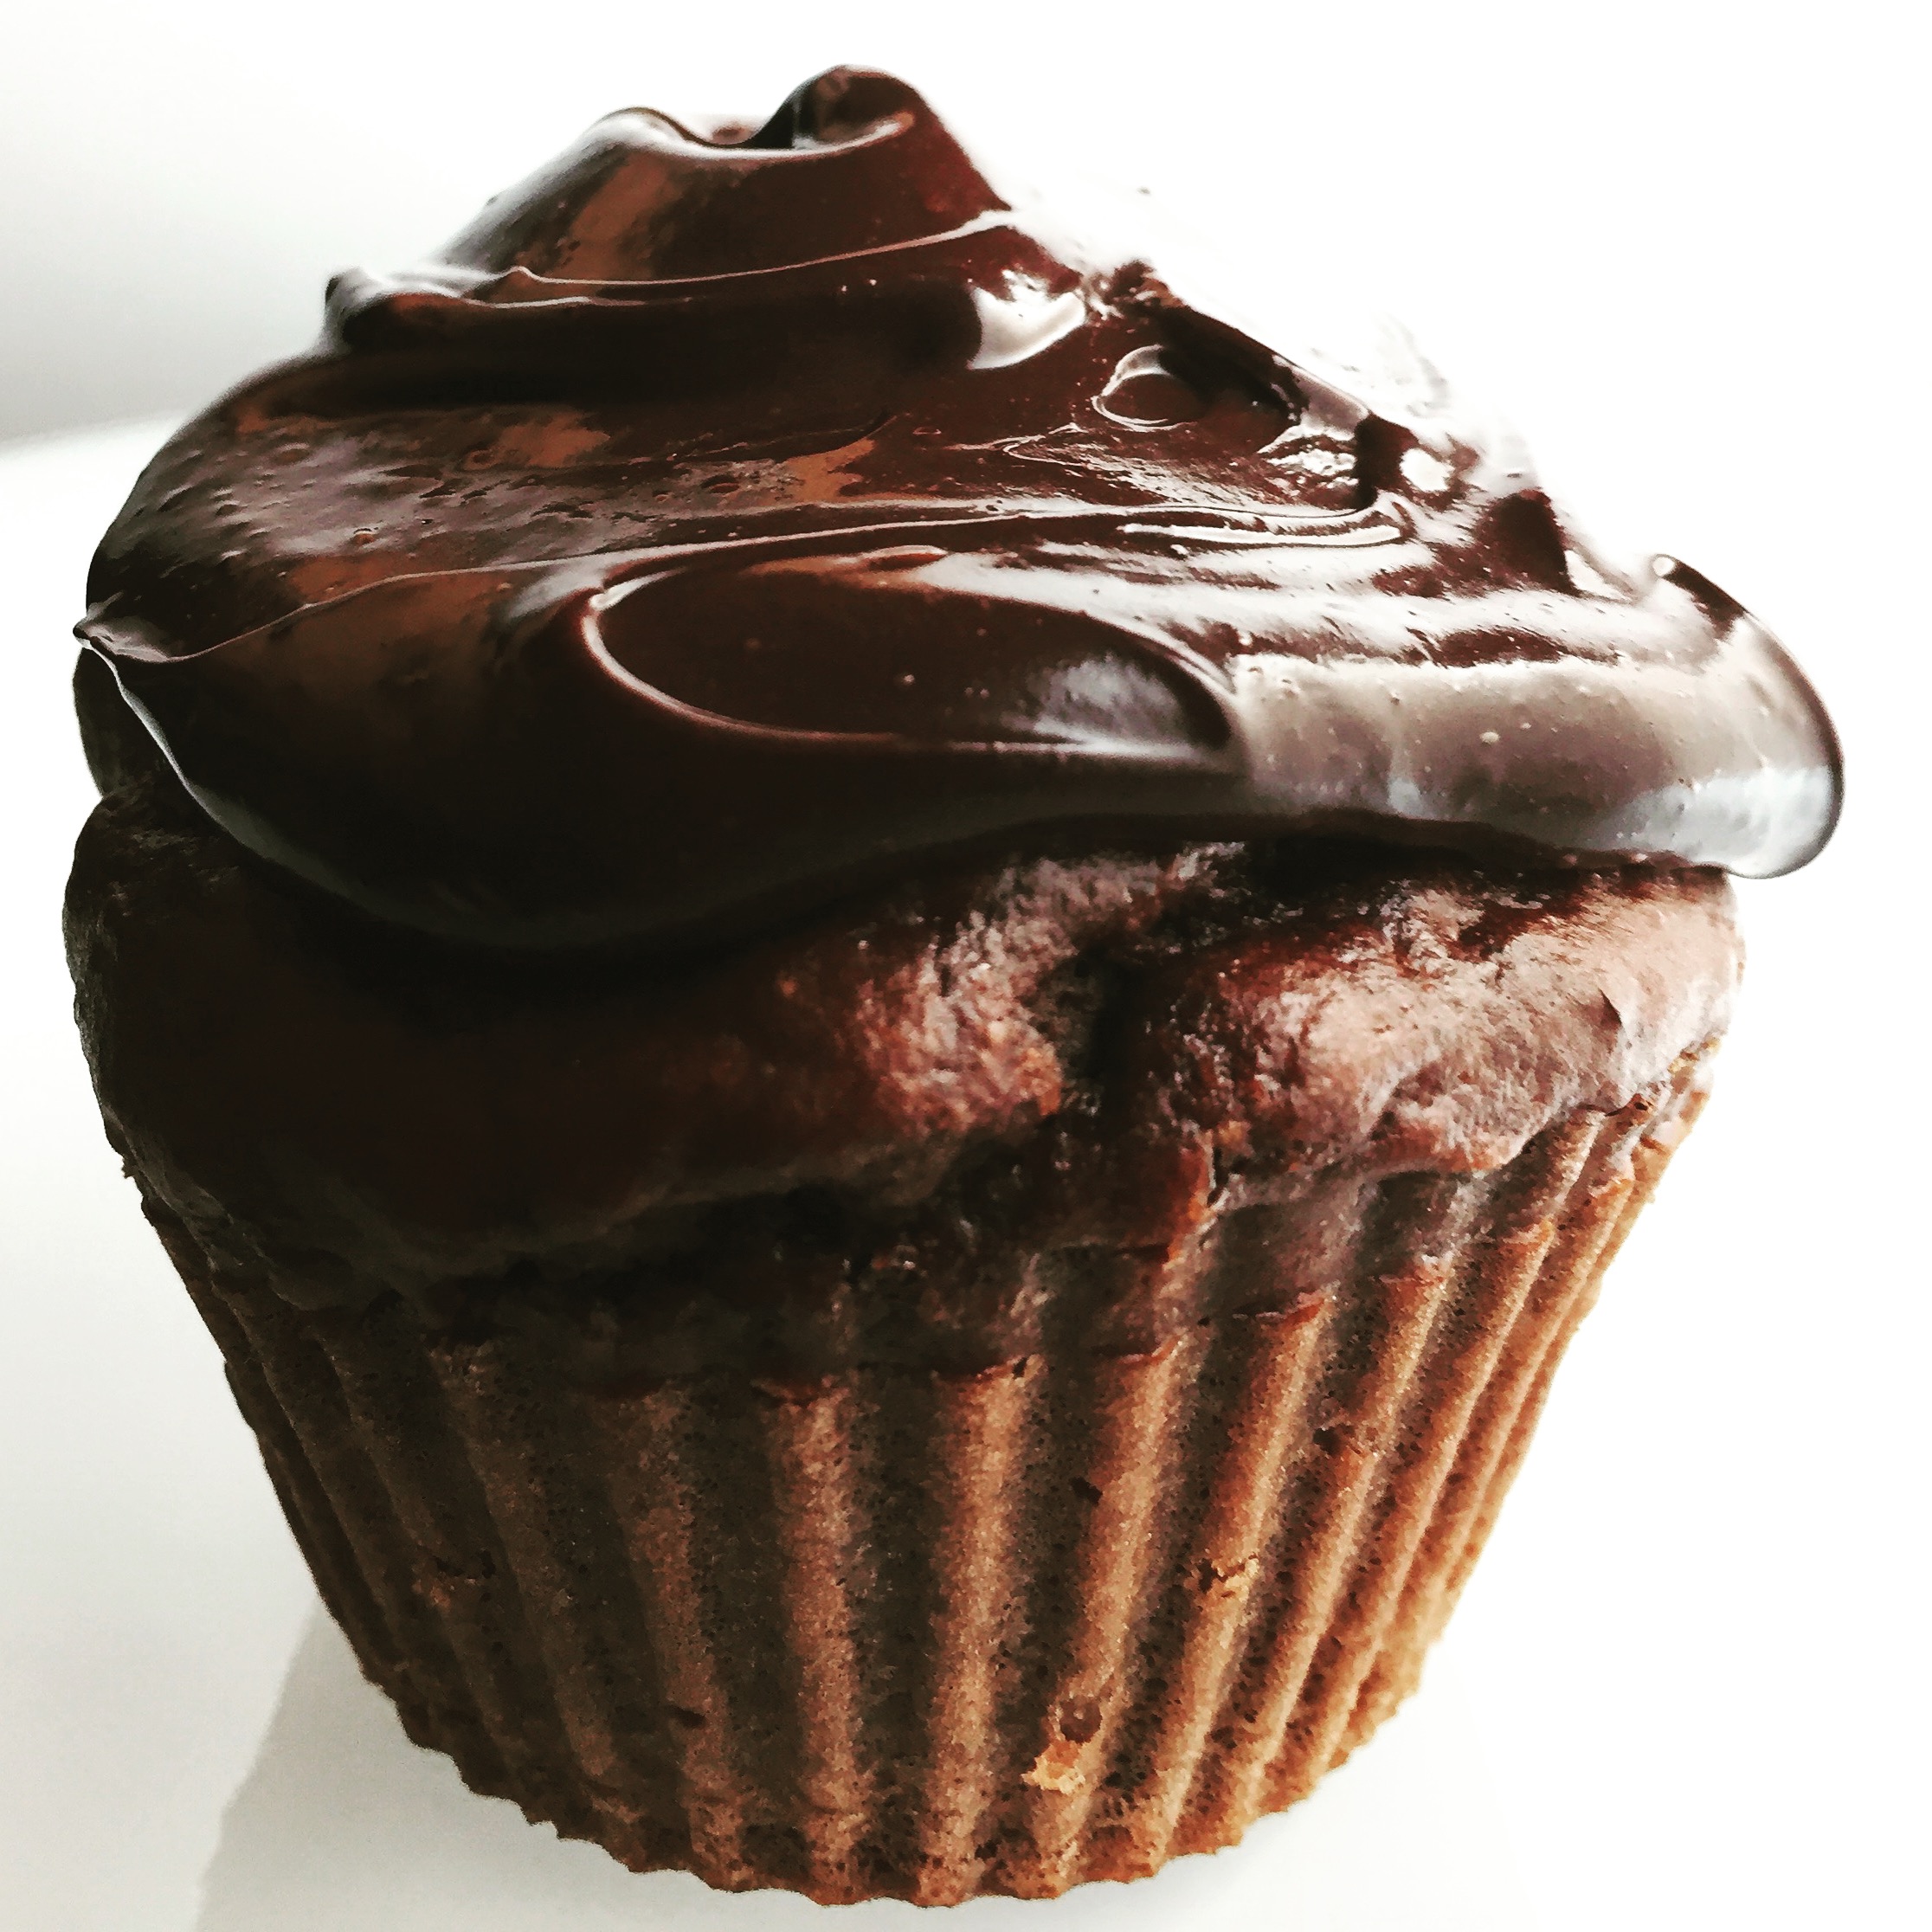 Decadent-Chocolate-Cupcakes